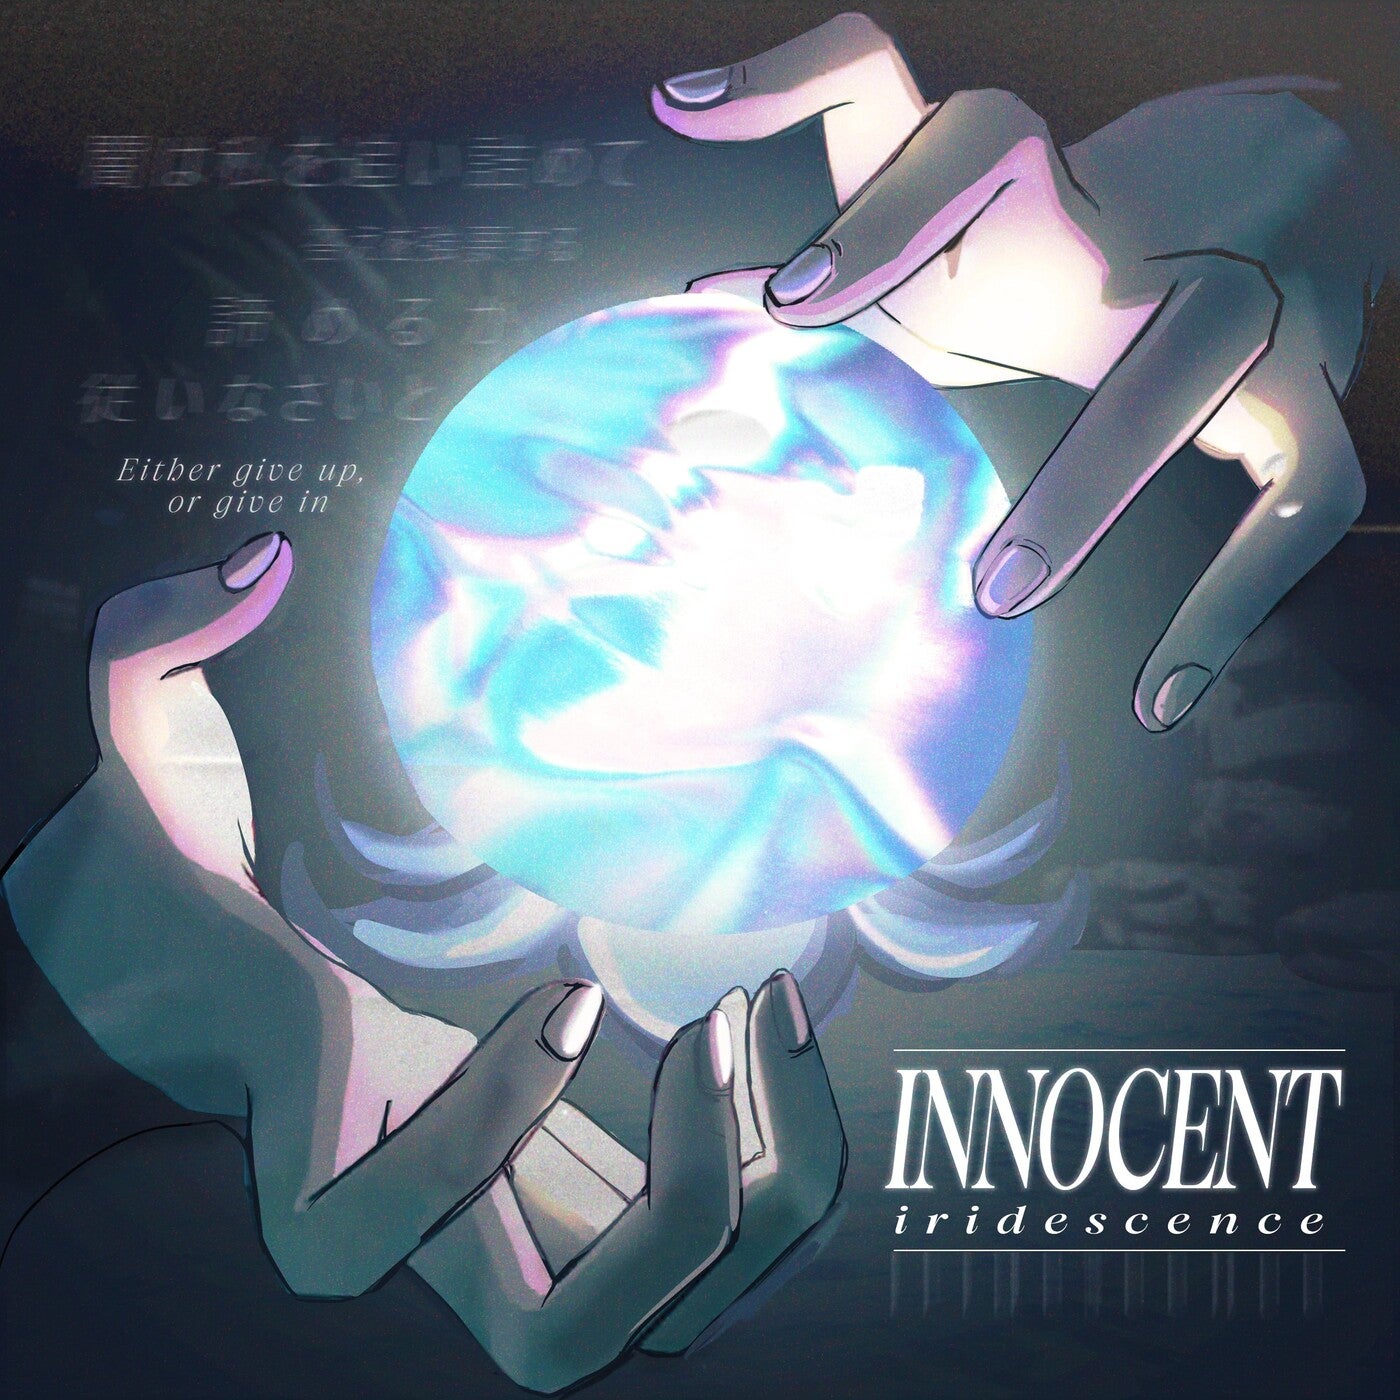 Innocent Iridescence